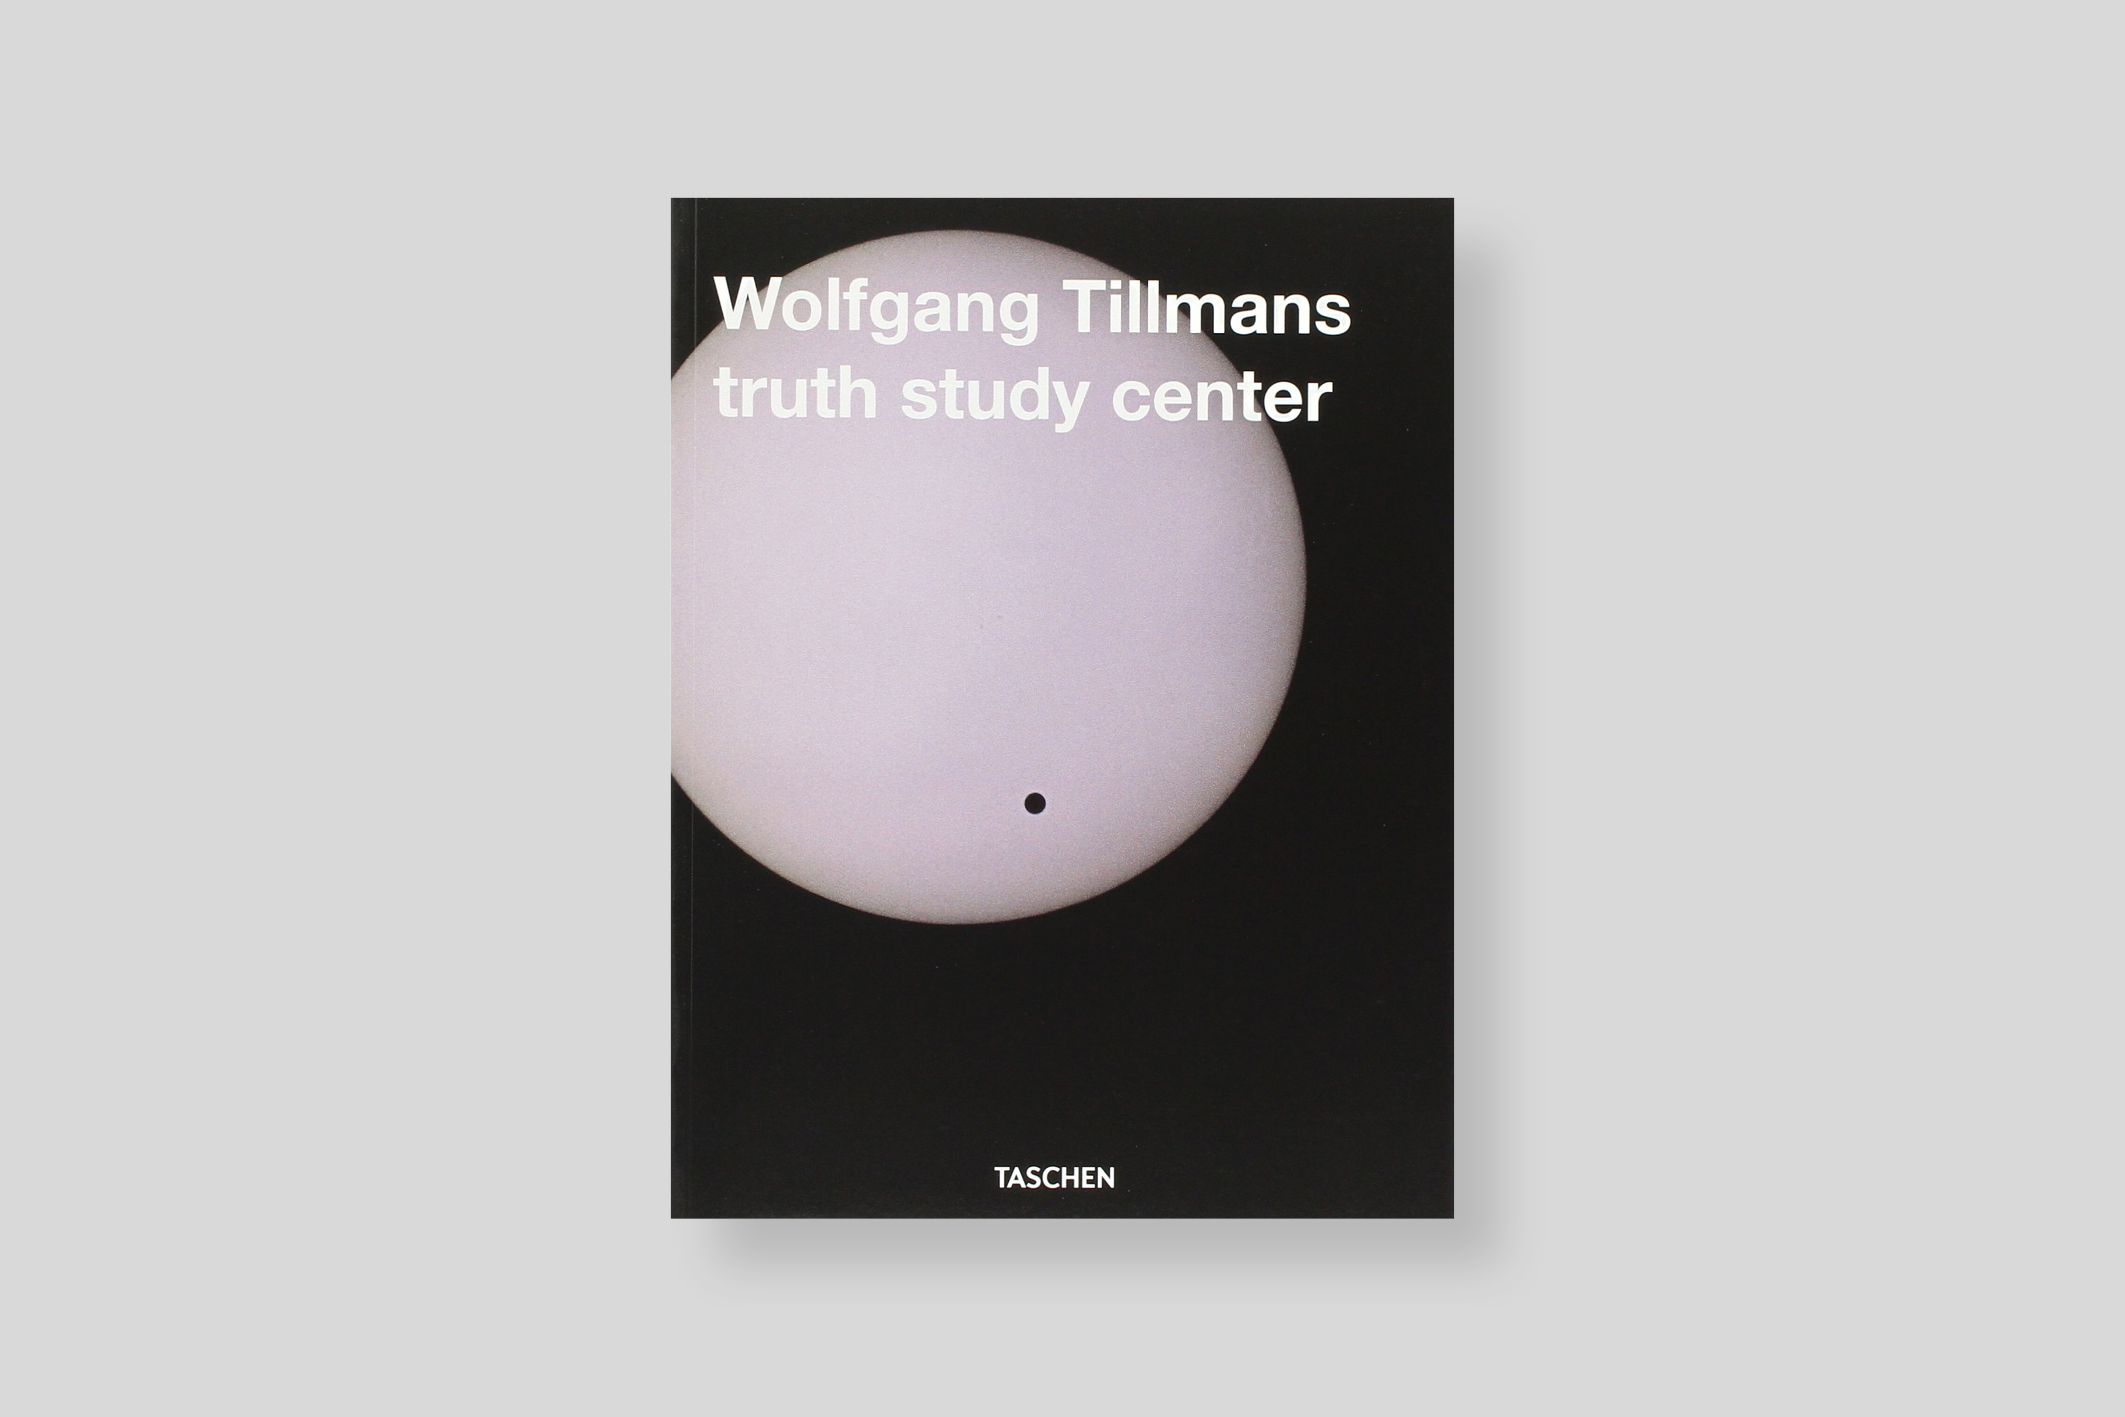 truth-study-center-tillmans-taschen-cover